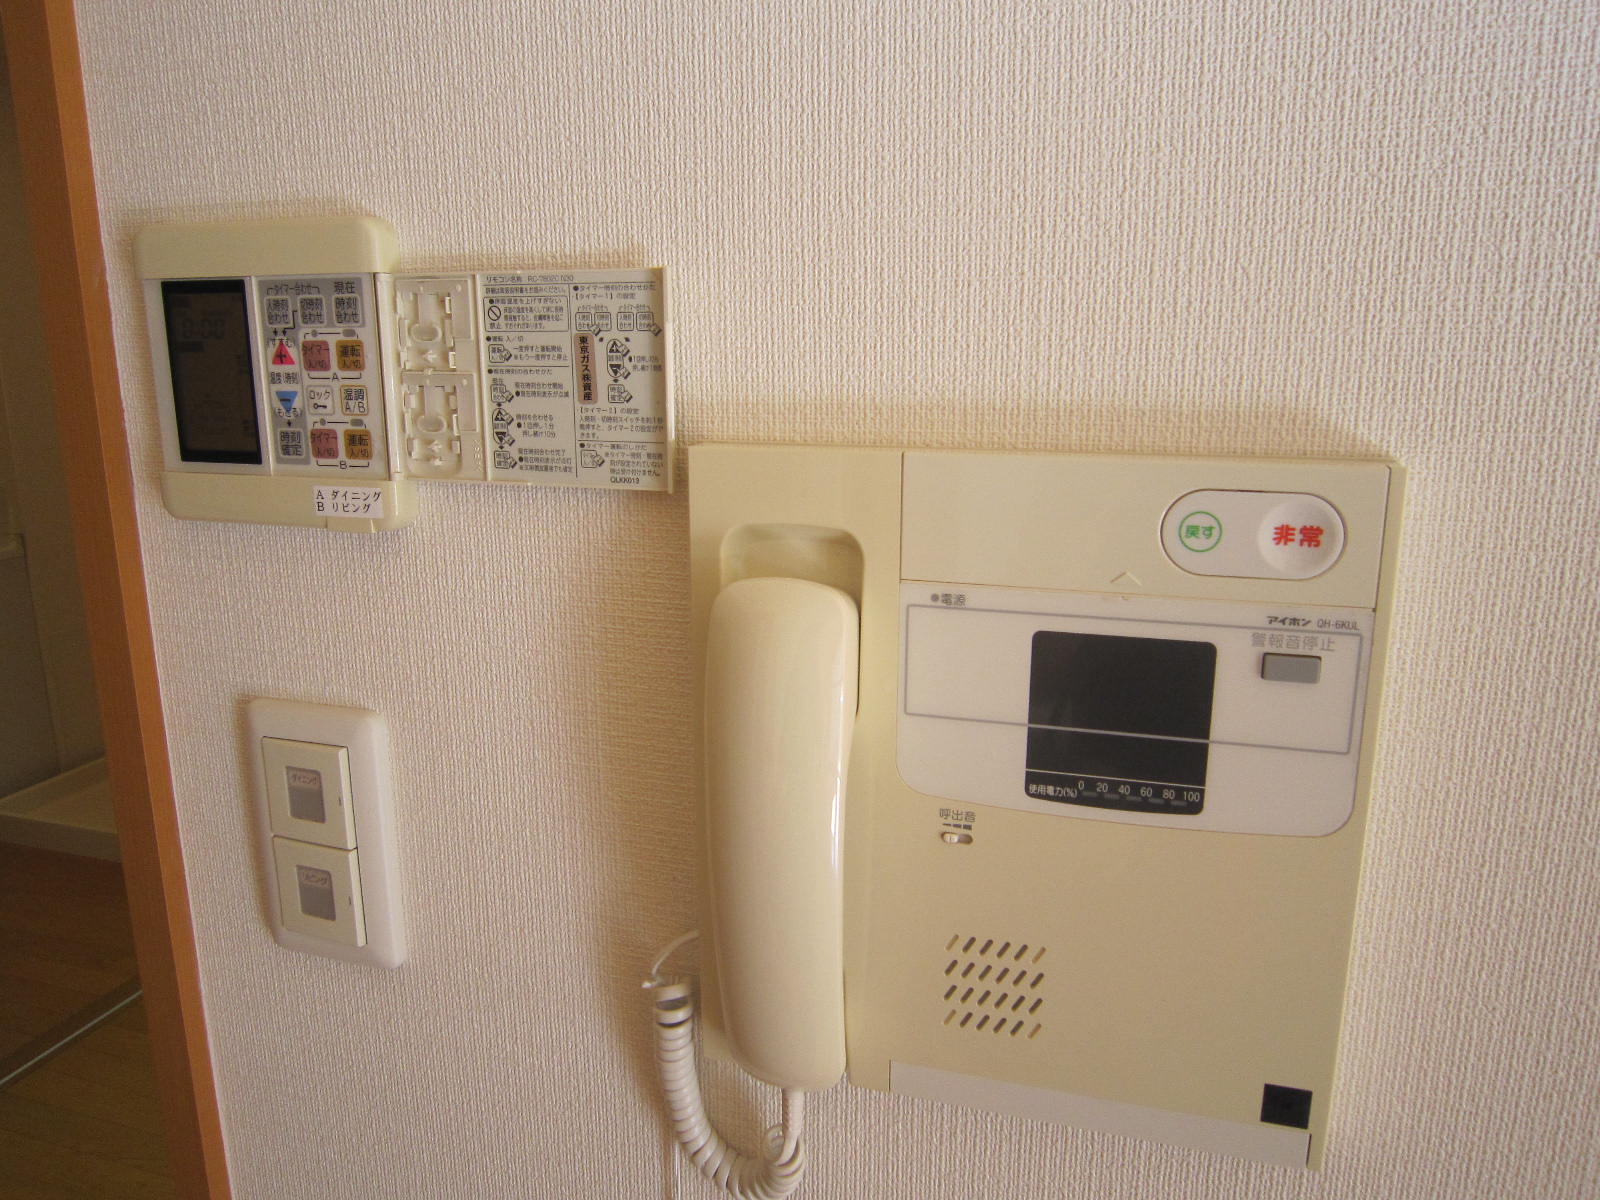 Security. With intercom. (Top left is floor heating operation panel)